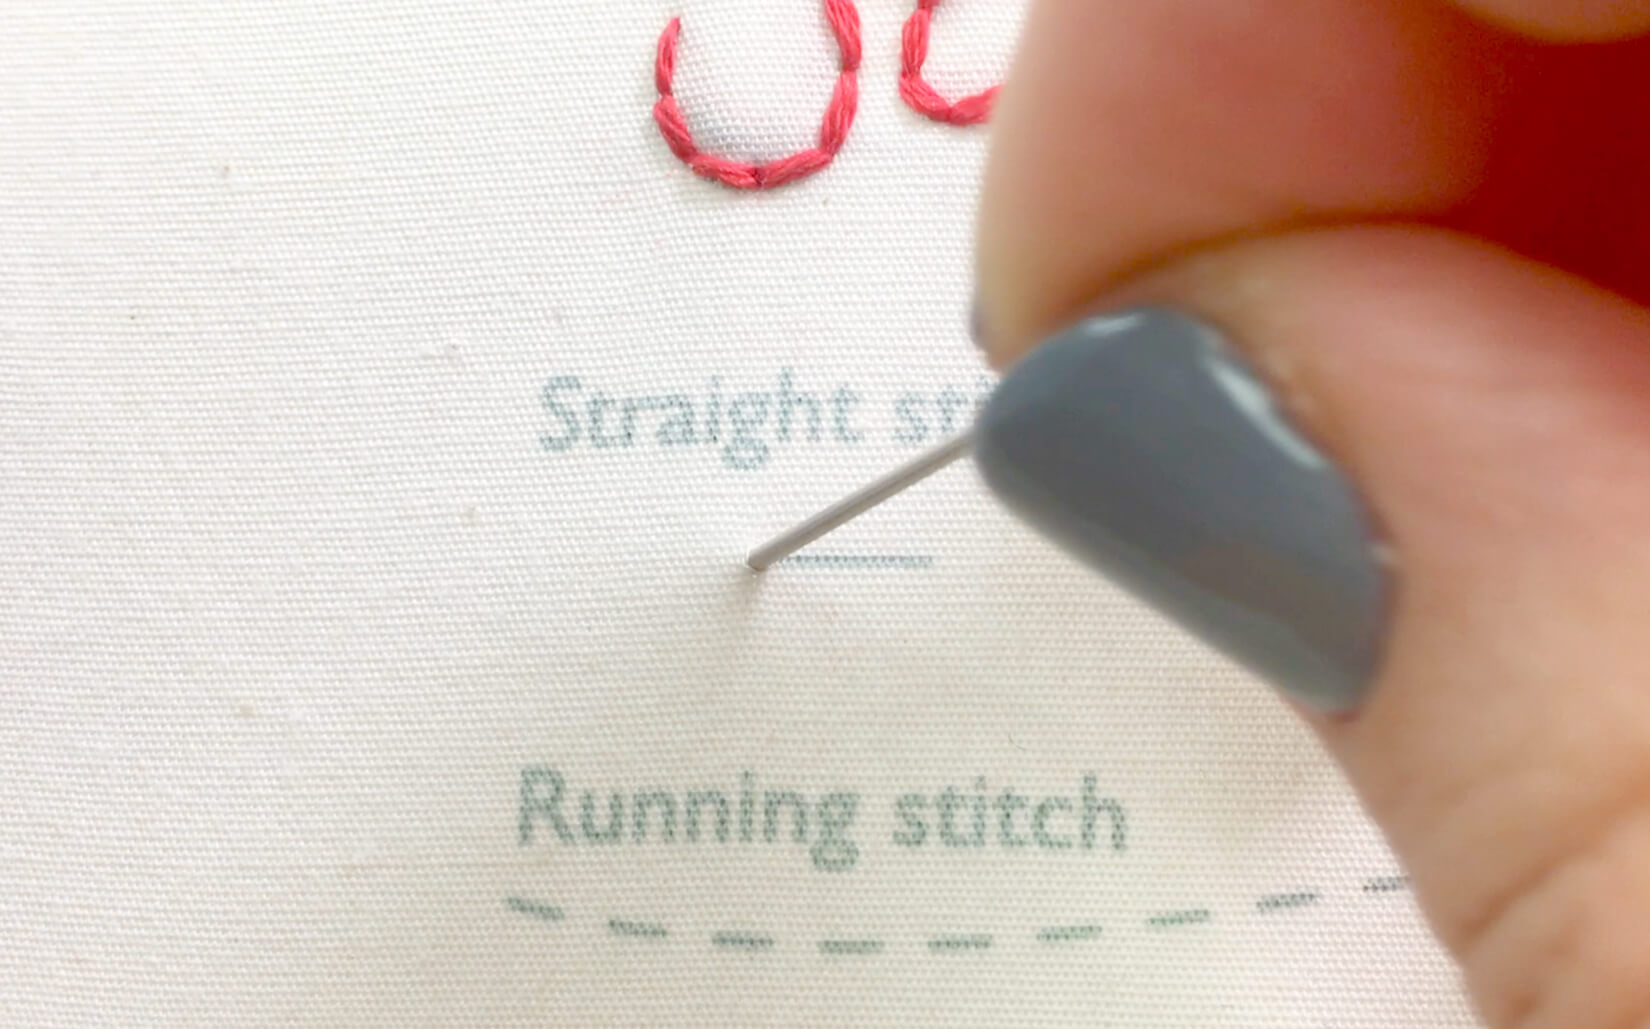 Image of stitching the straight stitch